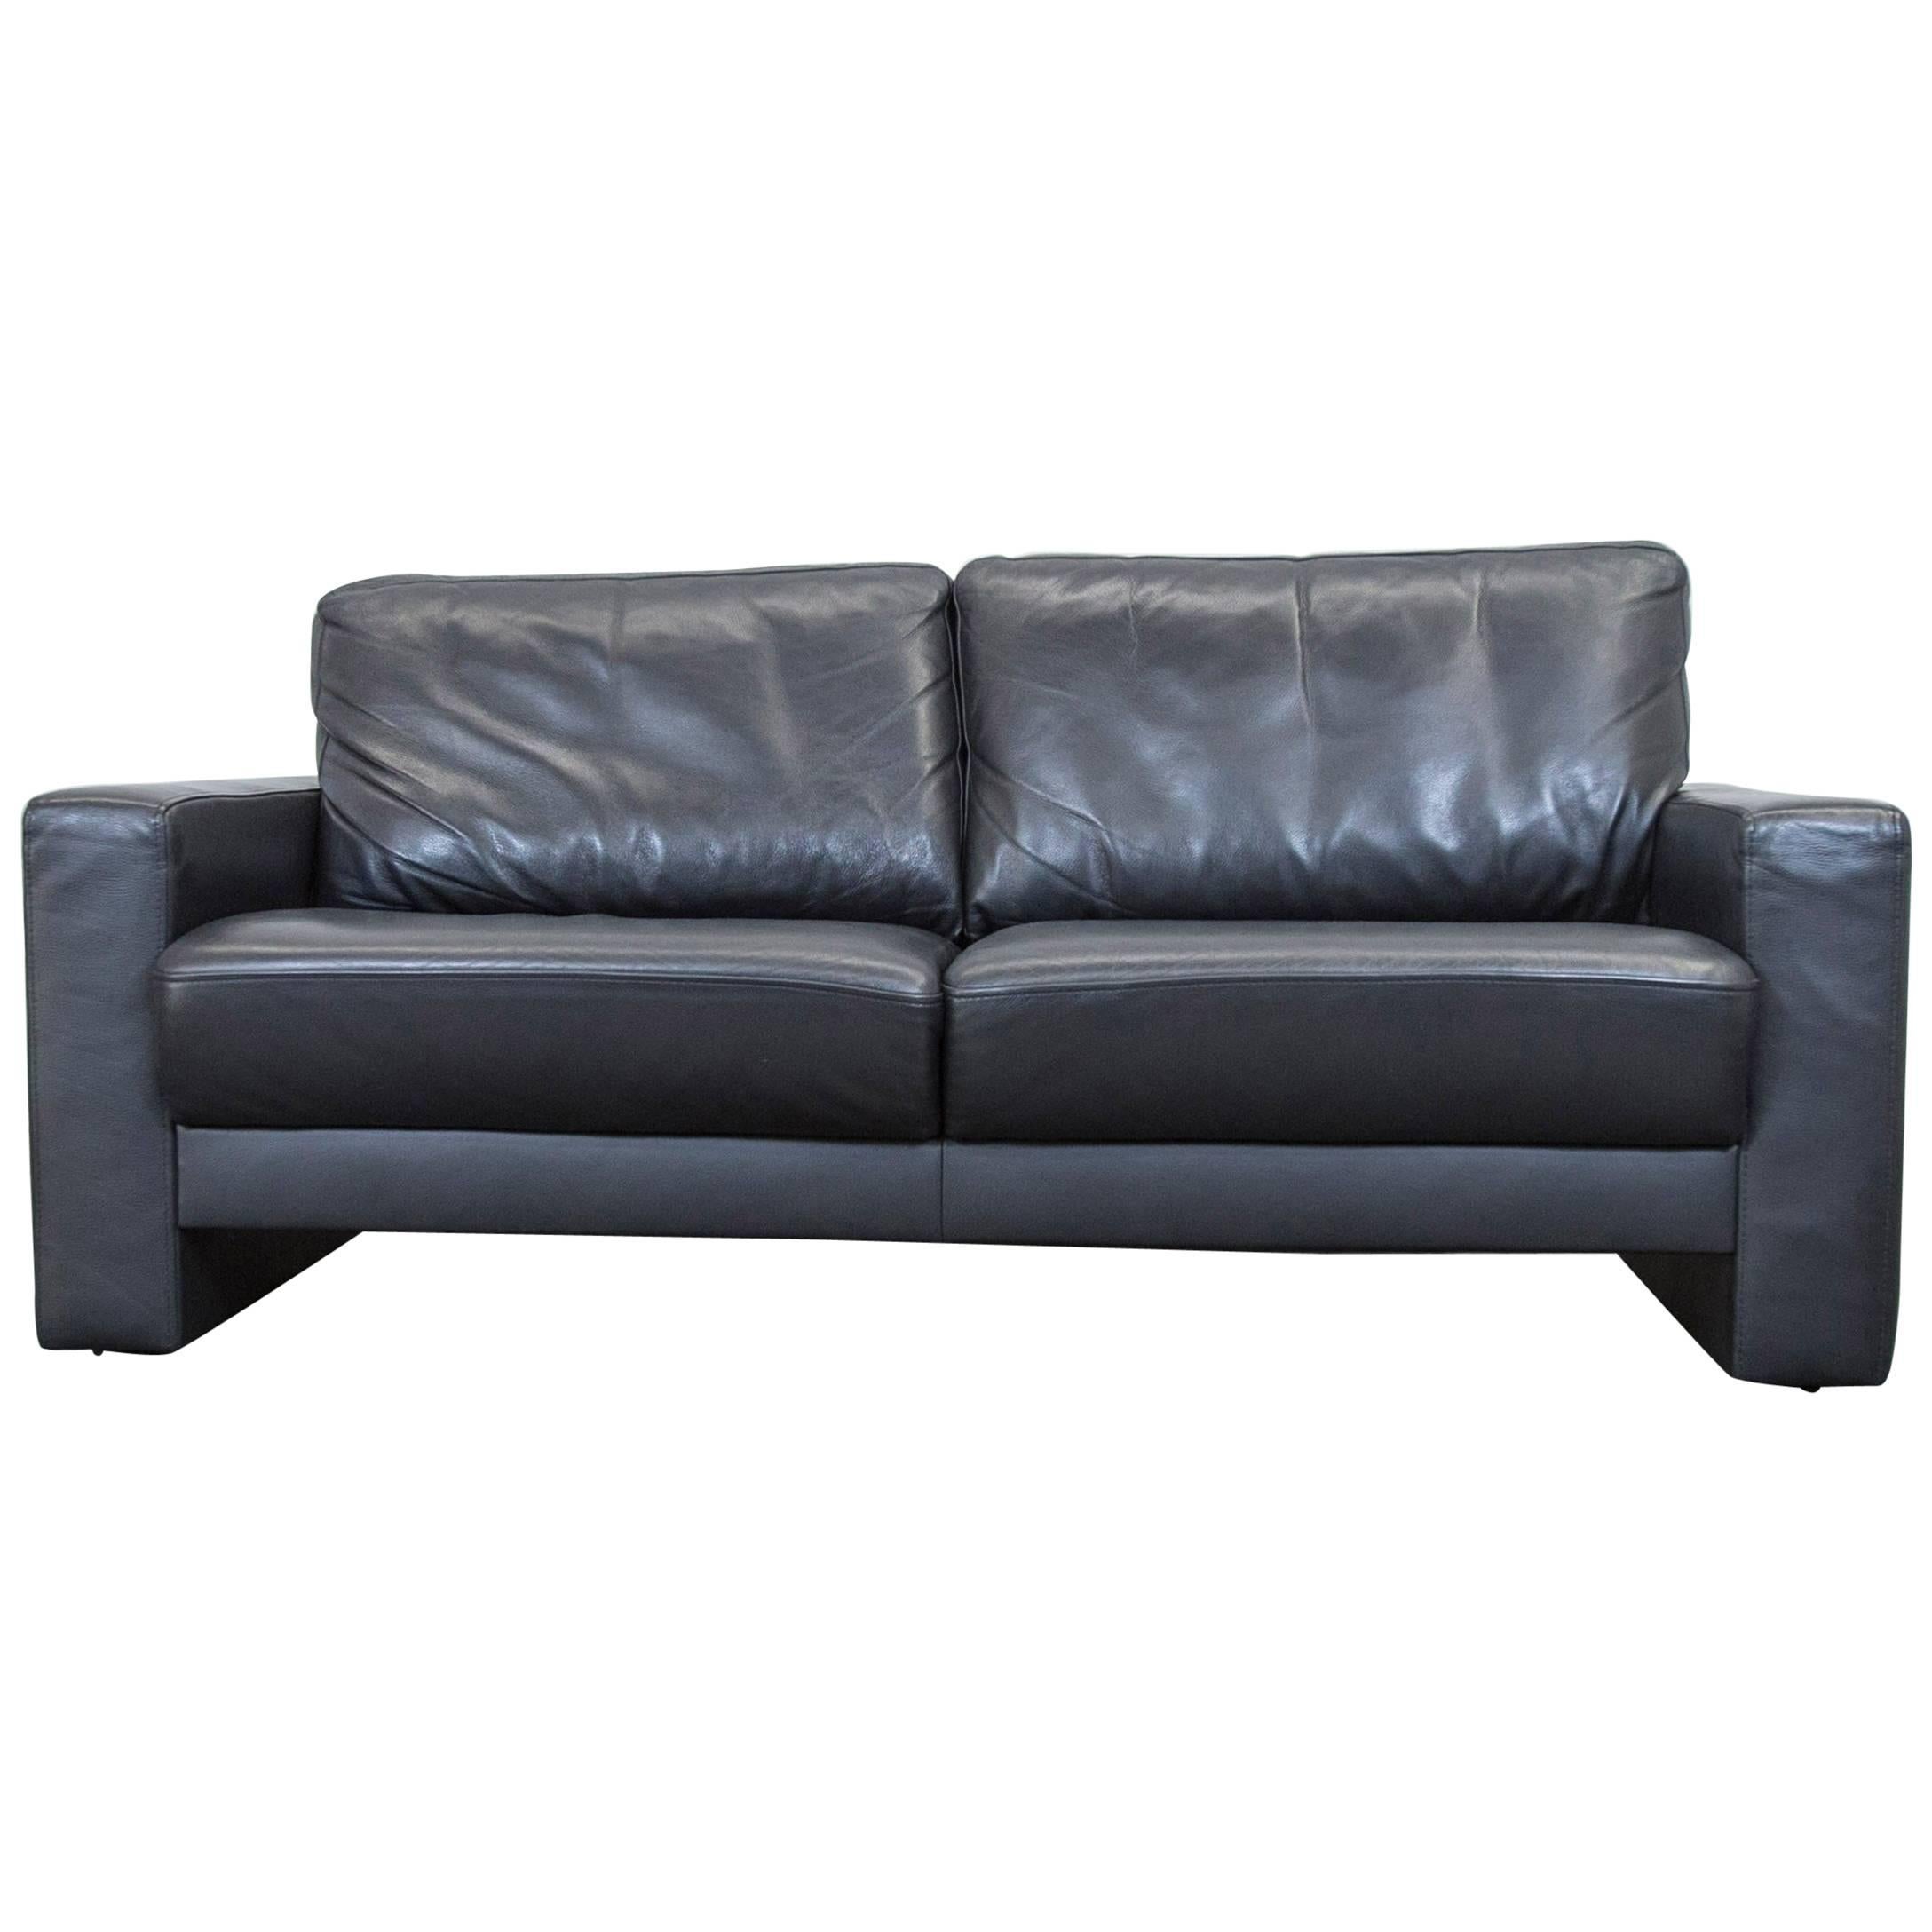 Külkens & Sohn Designer Leather Sofa Black Two-Seat Couch Modern For Sale